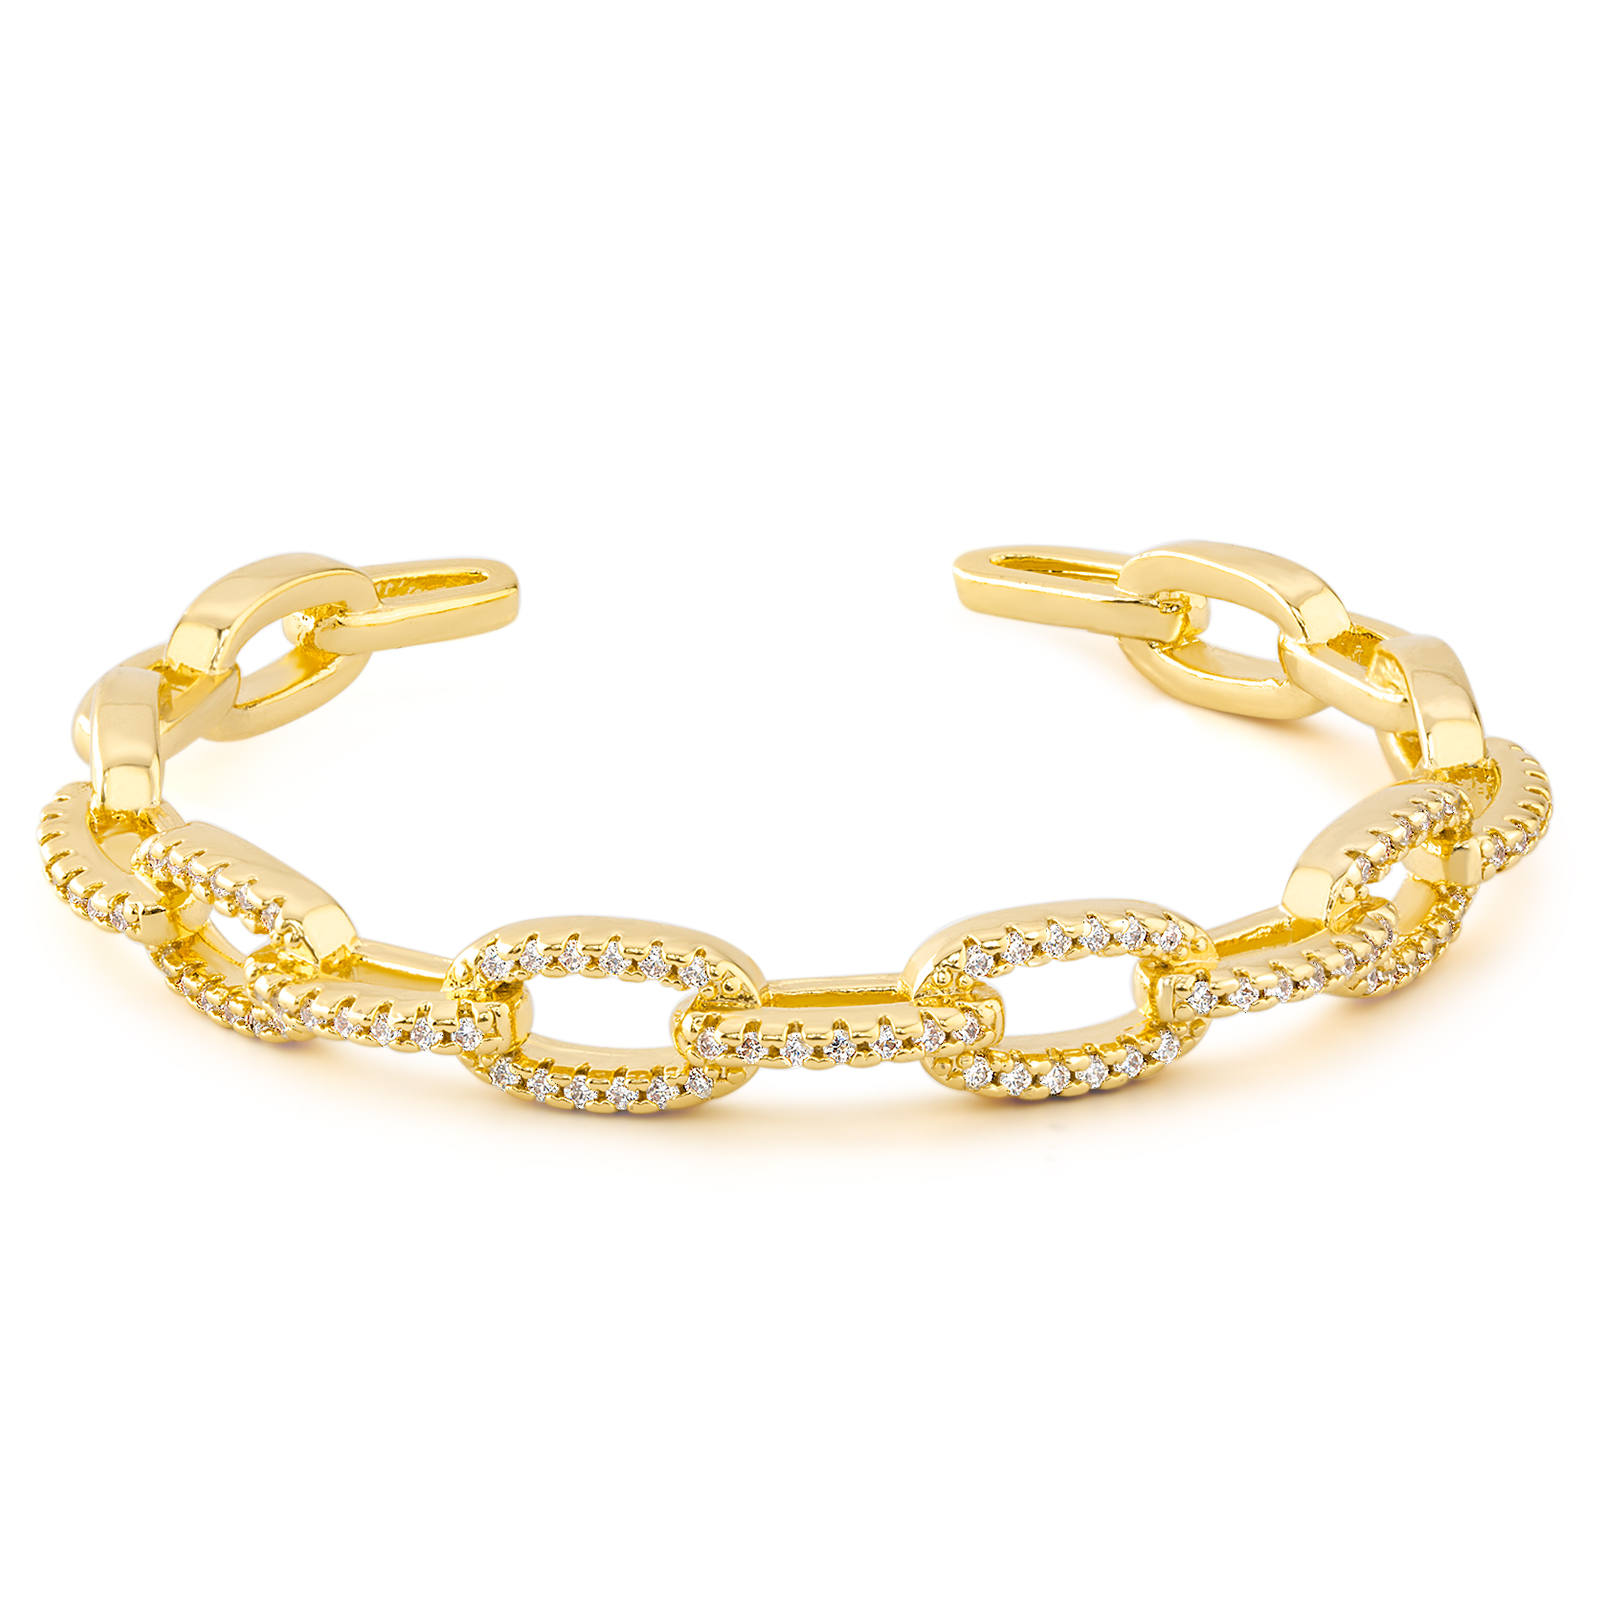 C-Shaped Shell Link Chain Cuff Bangle Bracelet